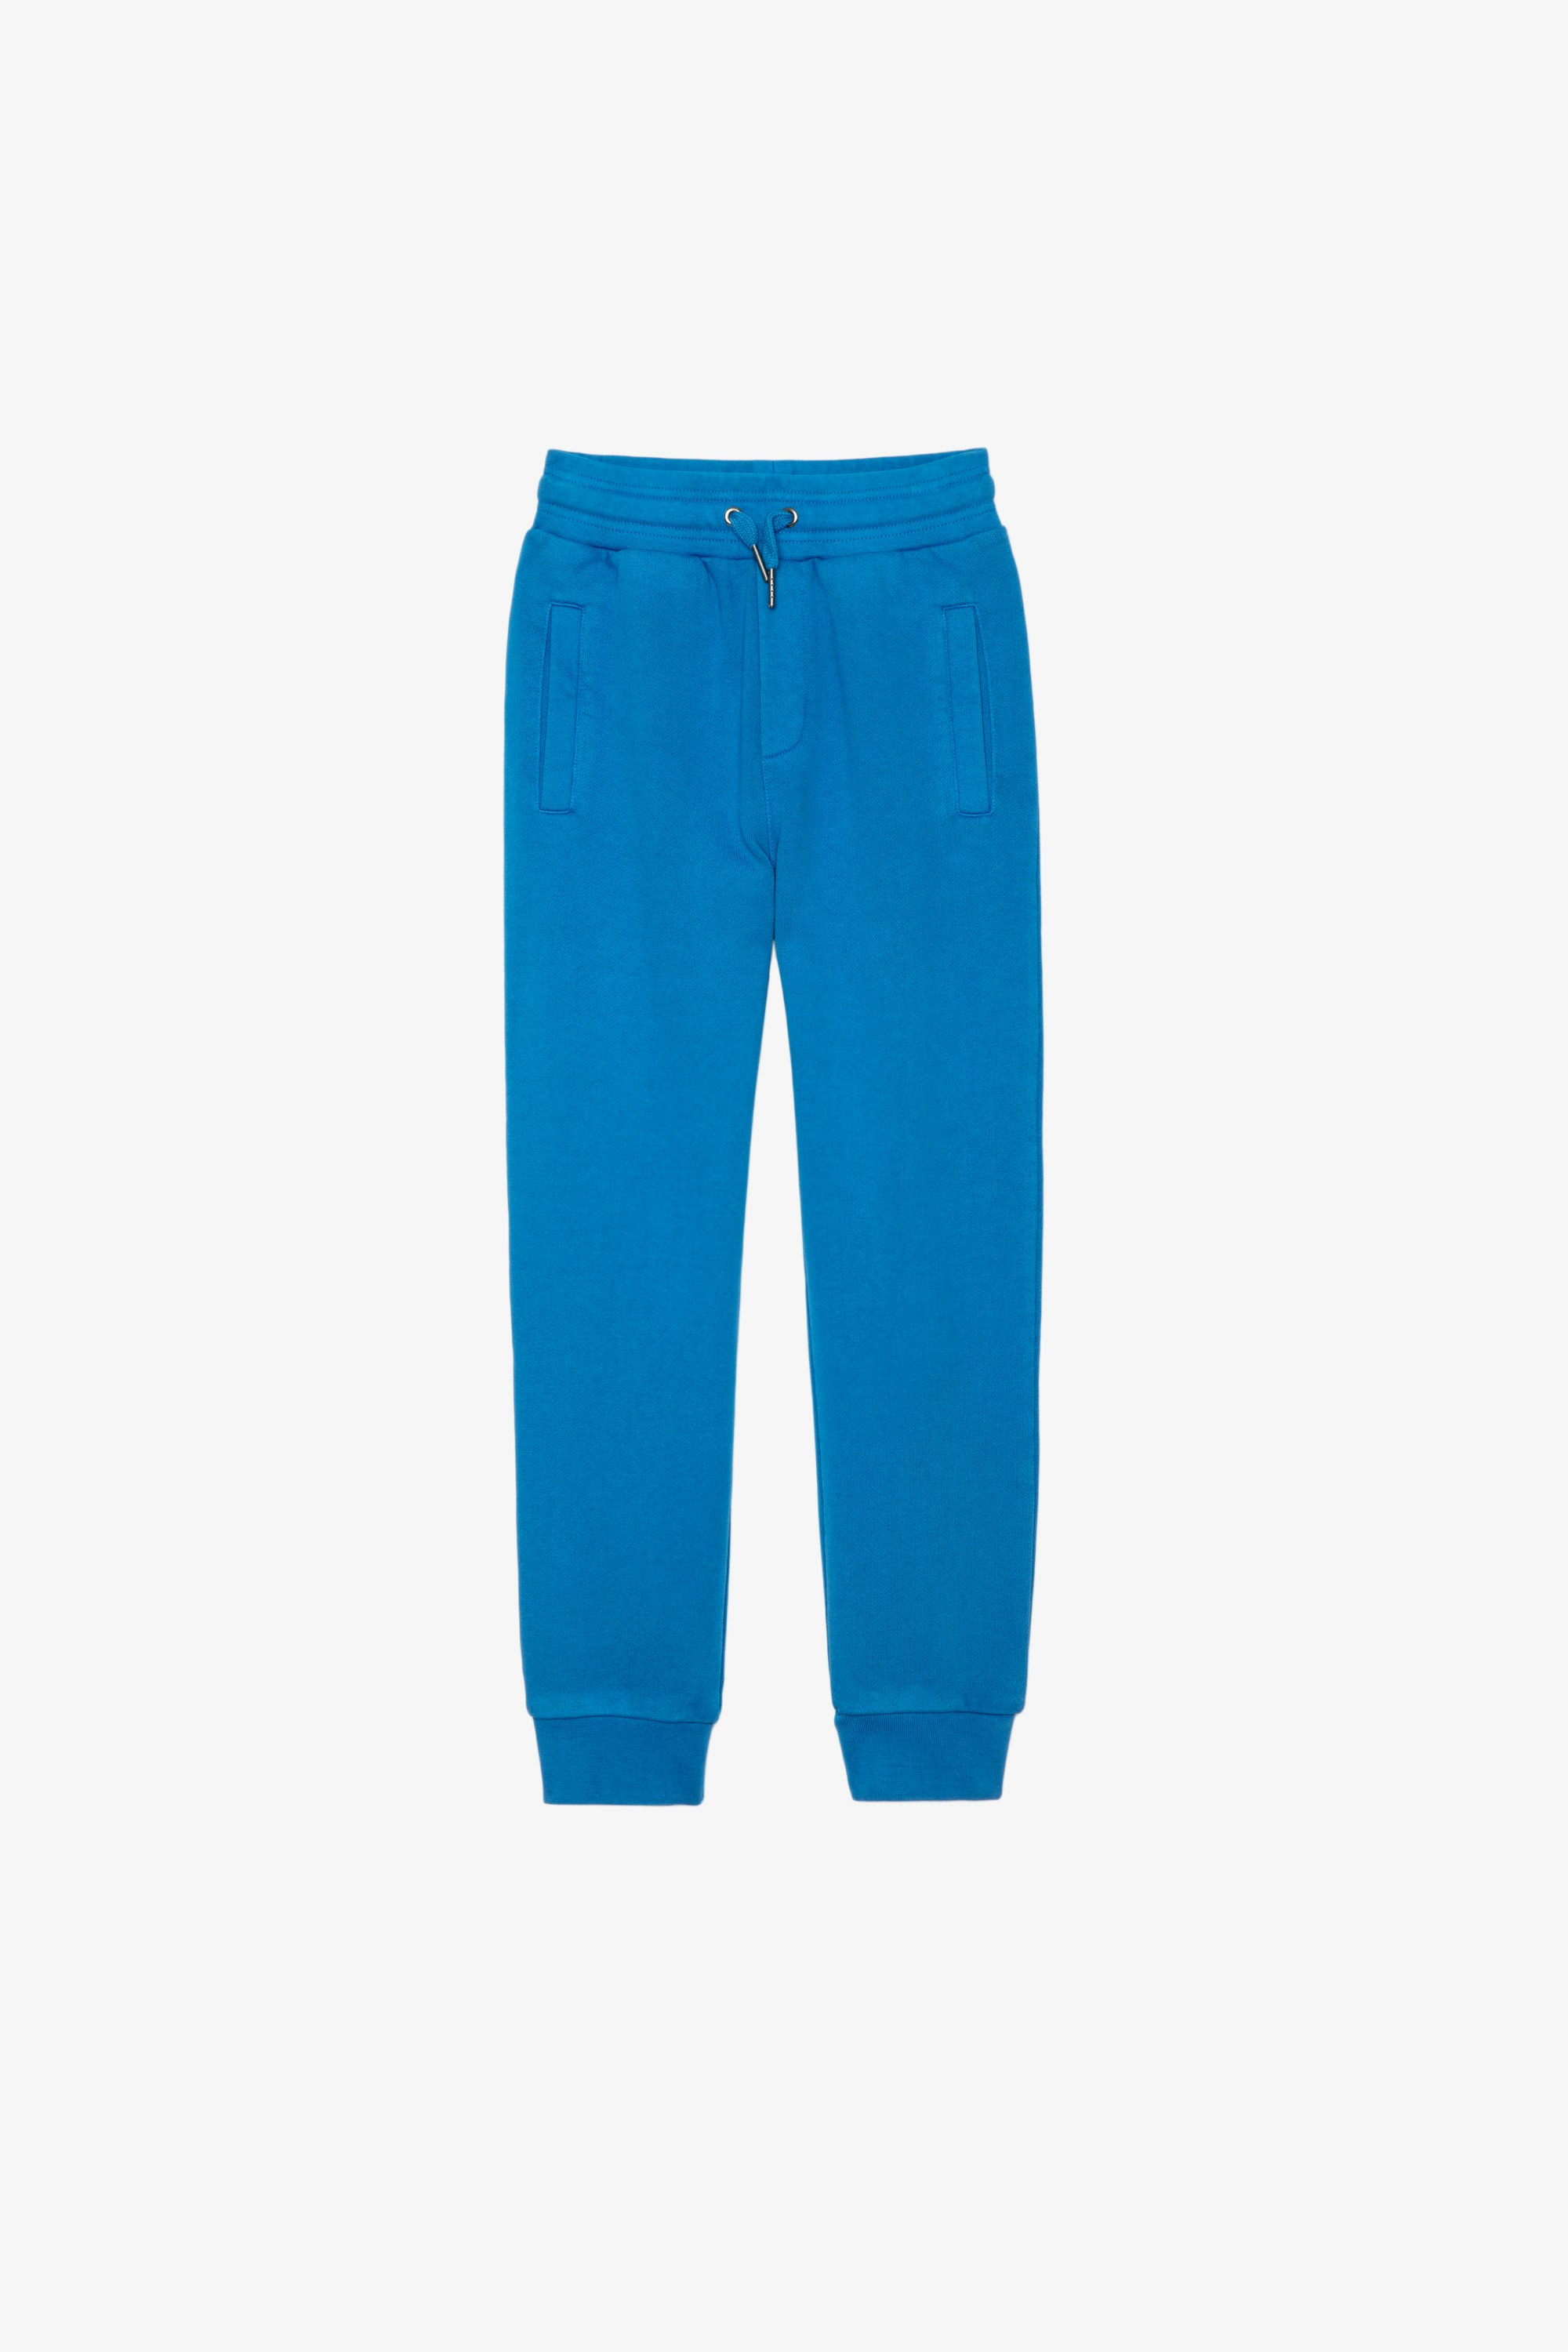 Lemmy Kids' Trousers Kids' blue cotton joggers